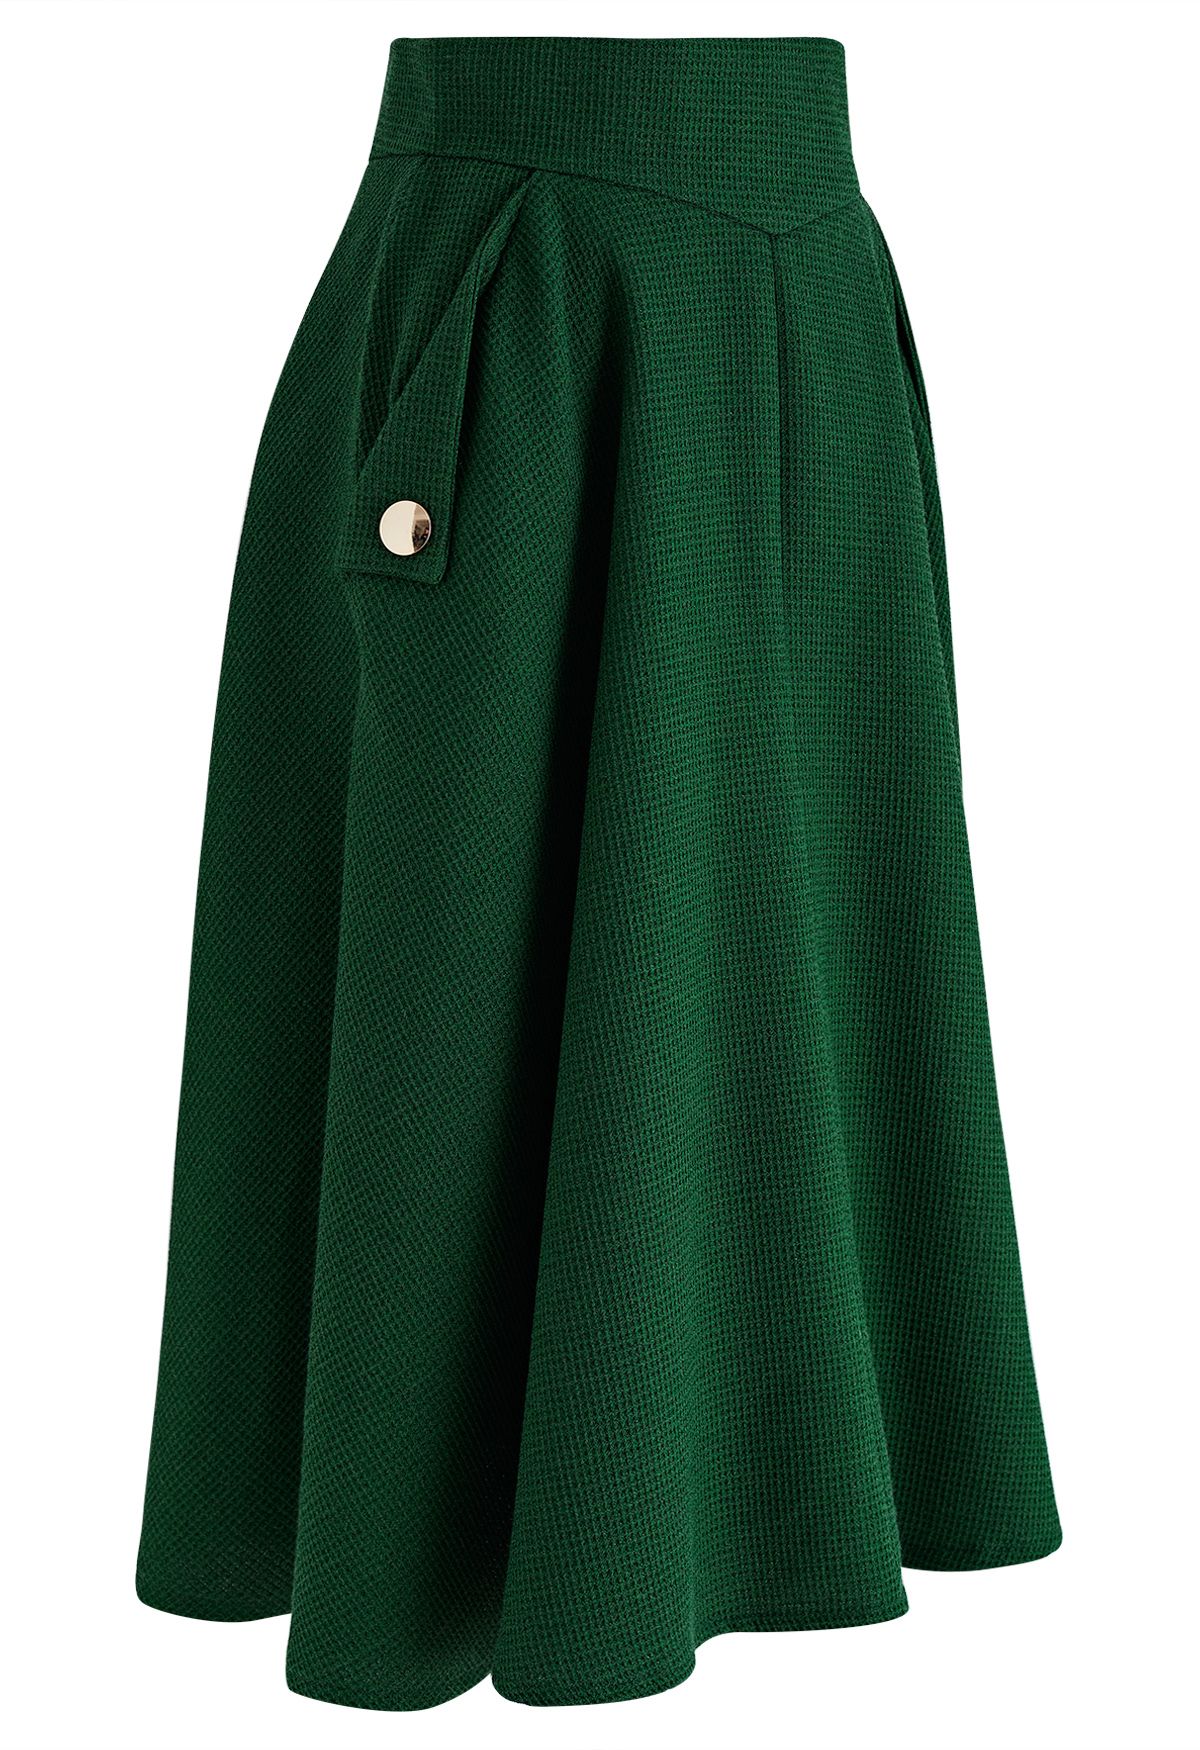 Waffle Texture A-Line Midi Skirt in Dark Green